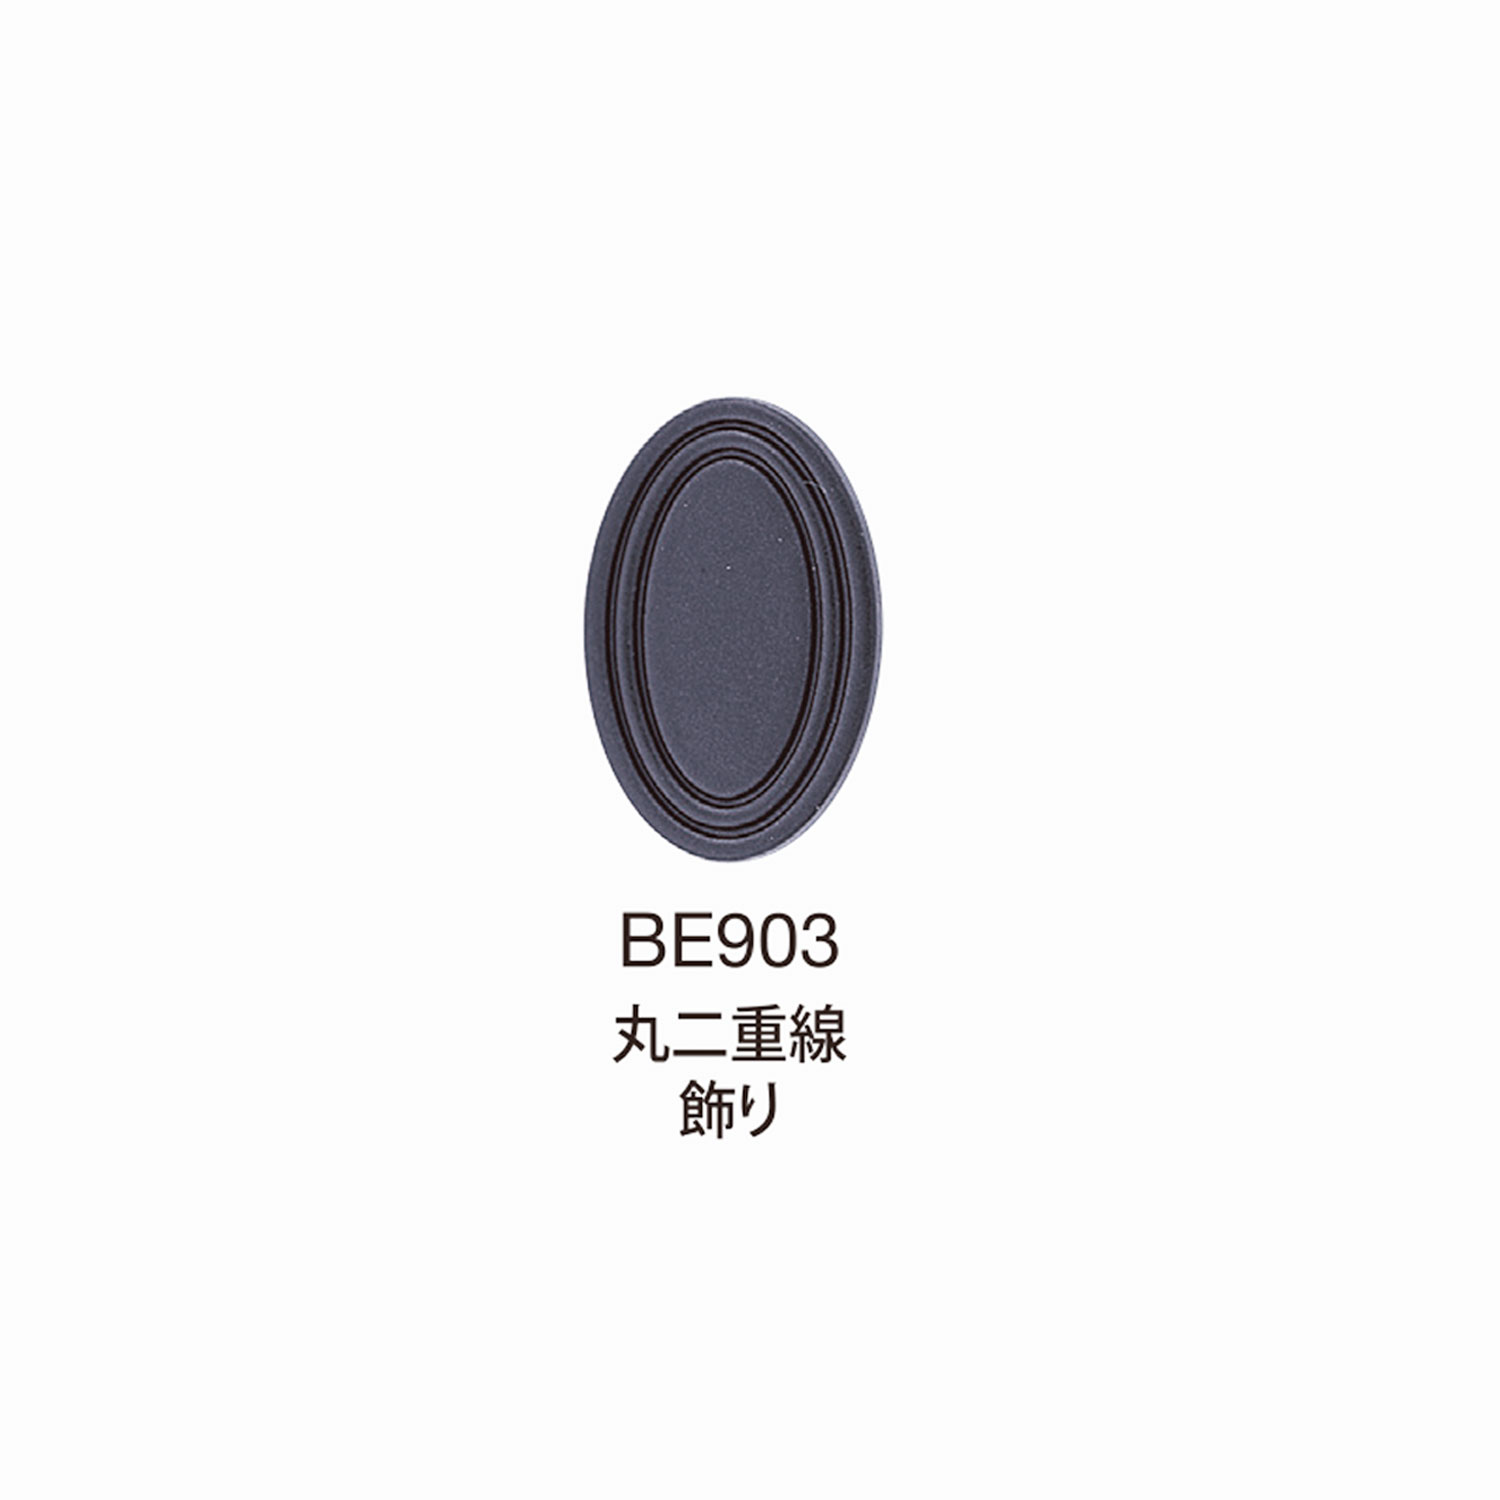 BE903 BEREX α 탑 하드웨어 원형 이중선 장식[버클 고리, 링] 모리토(MORITO)